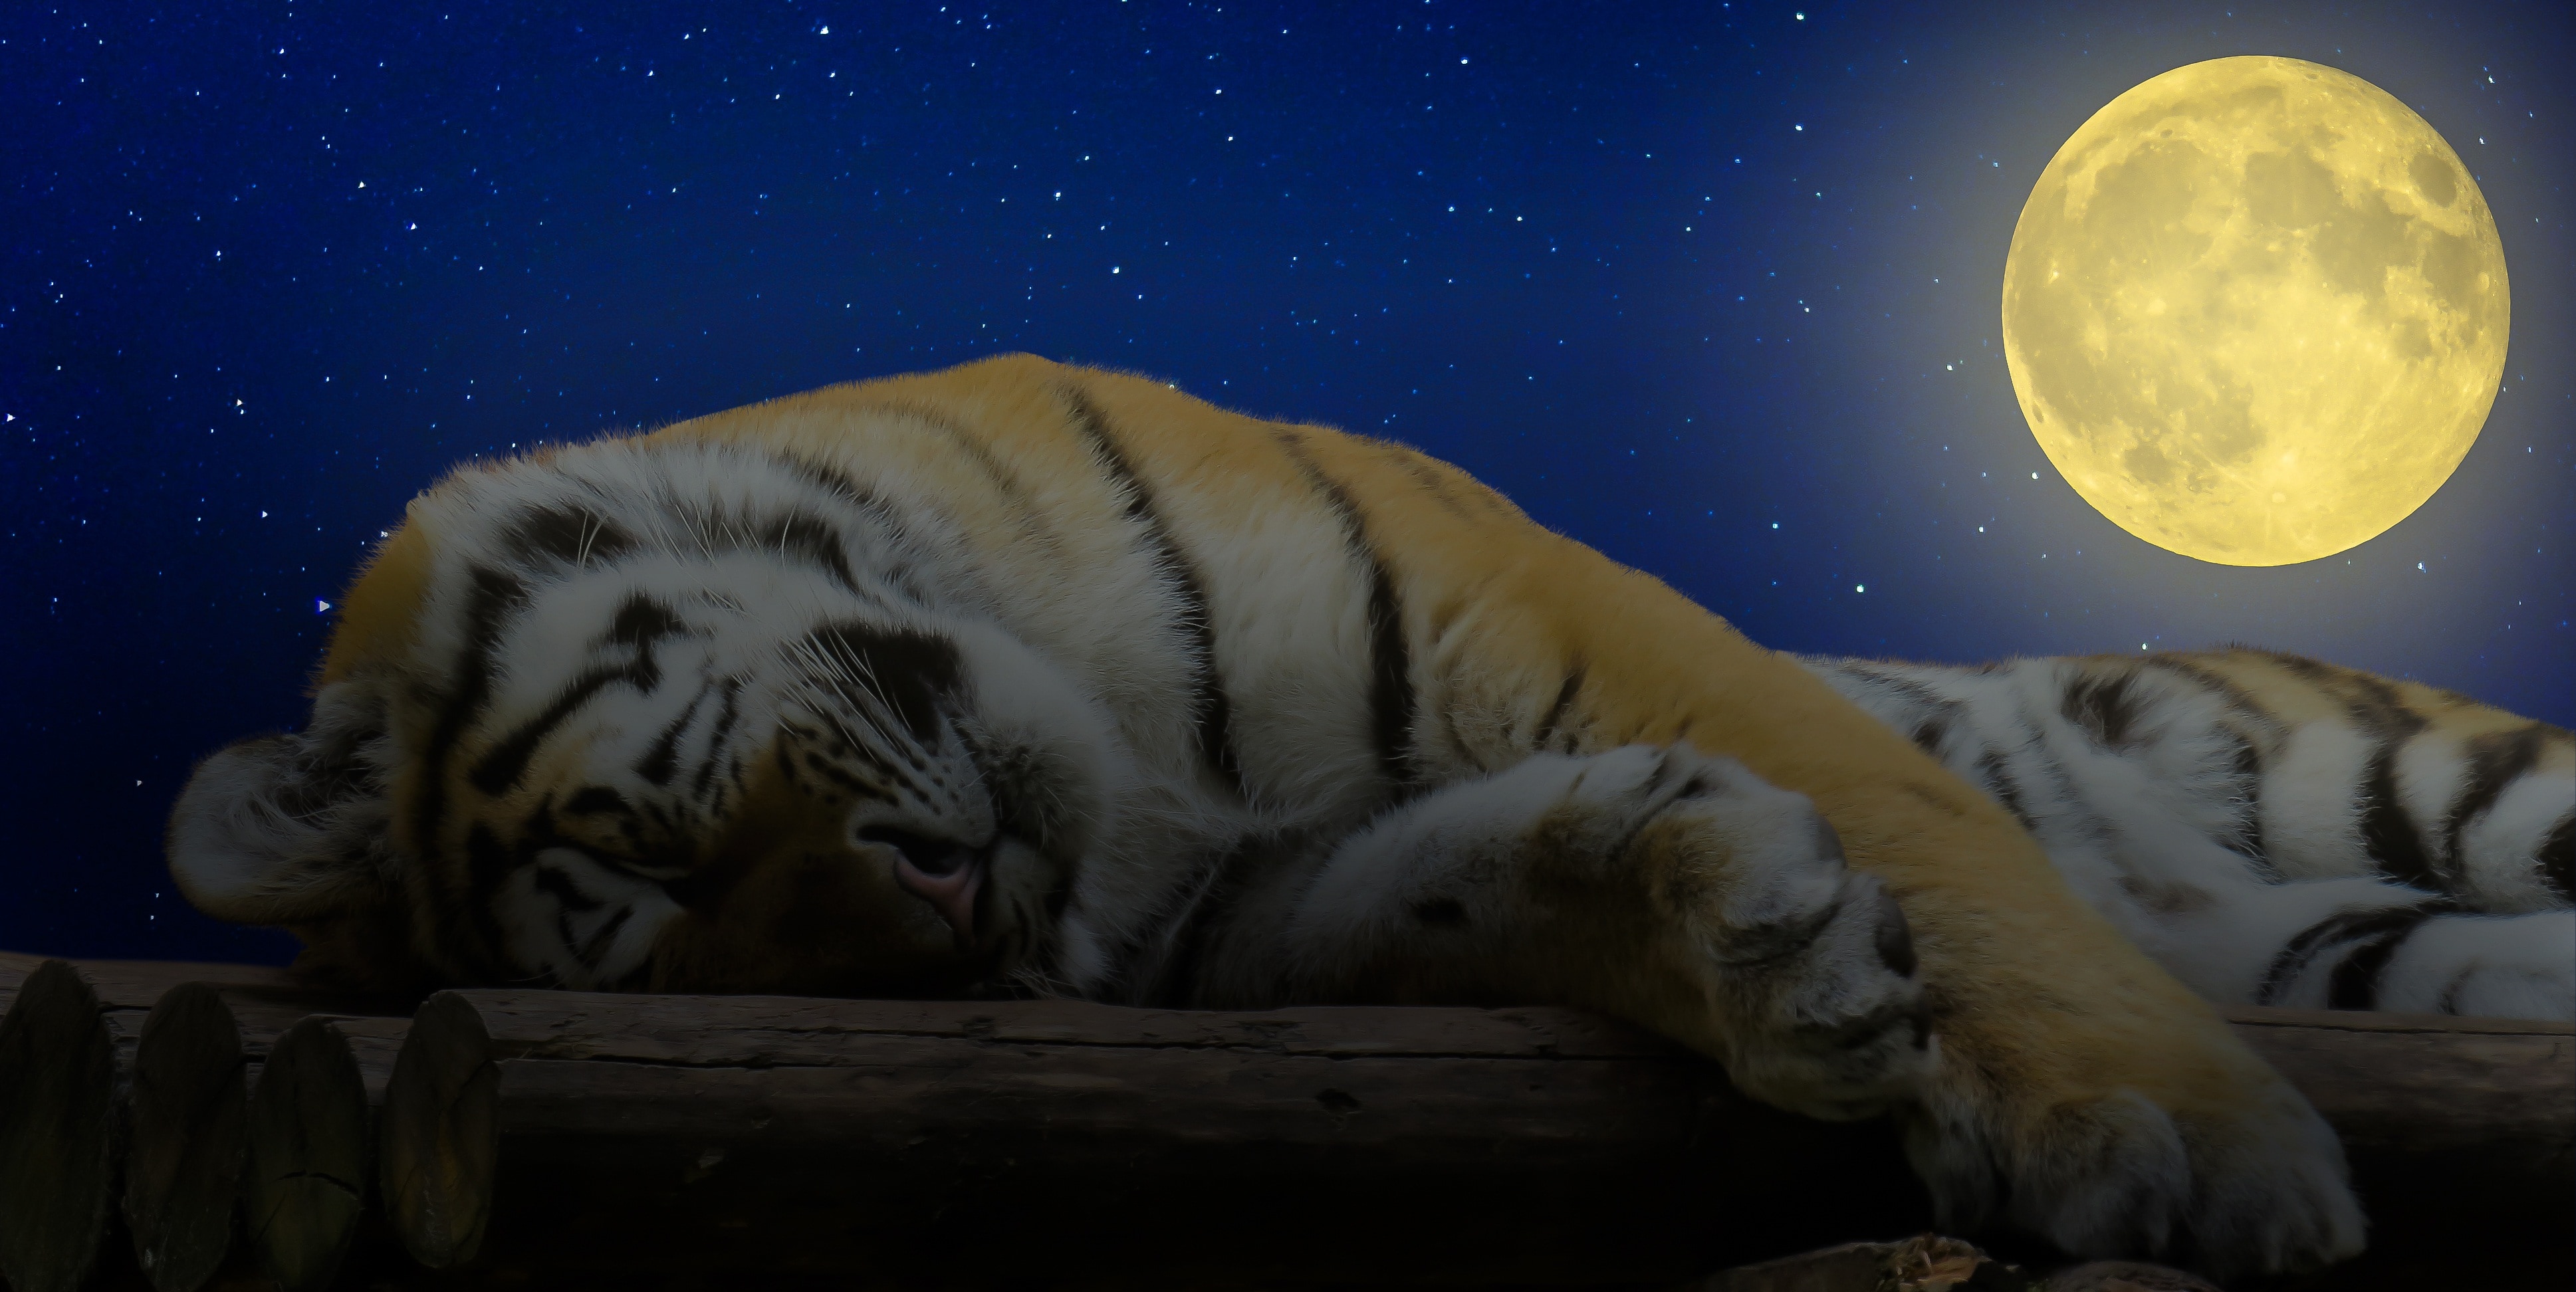 tiger and full moon illustration